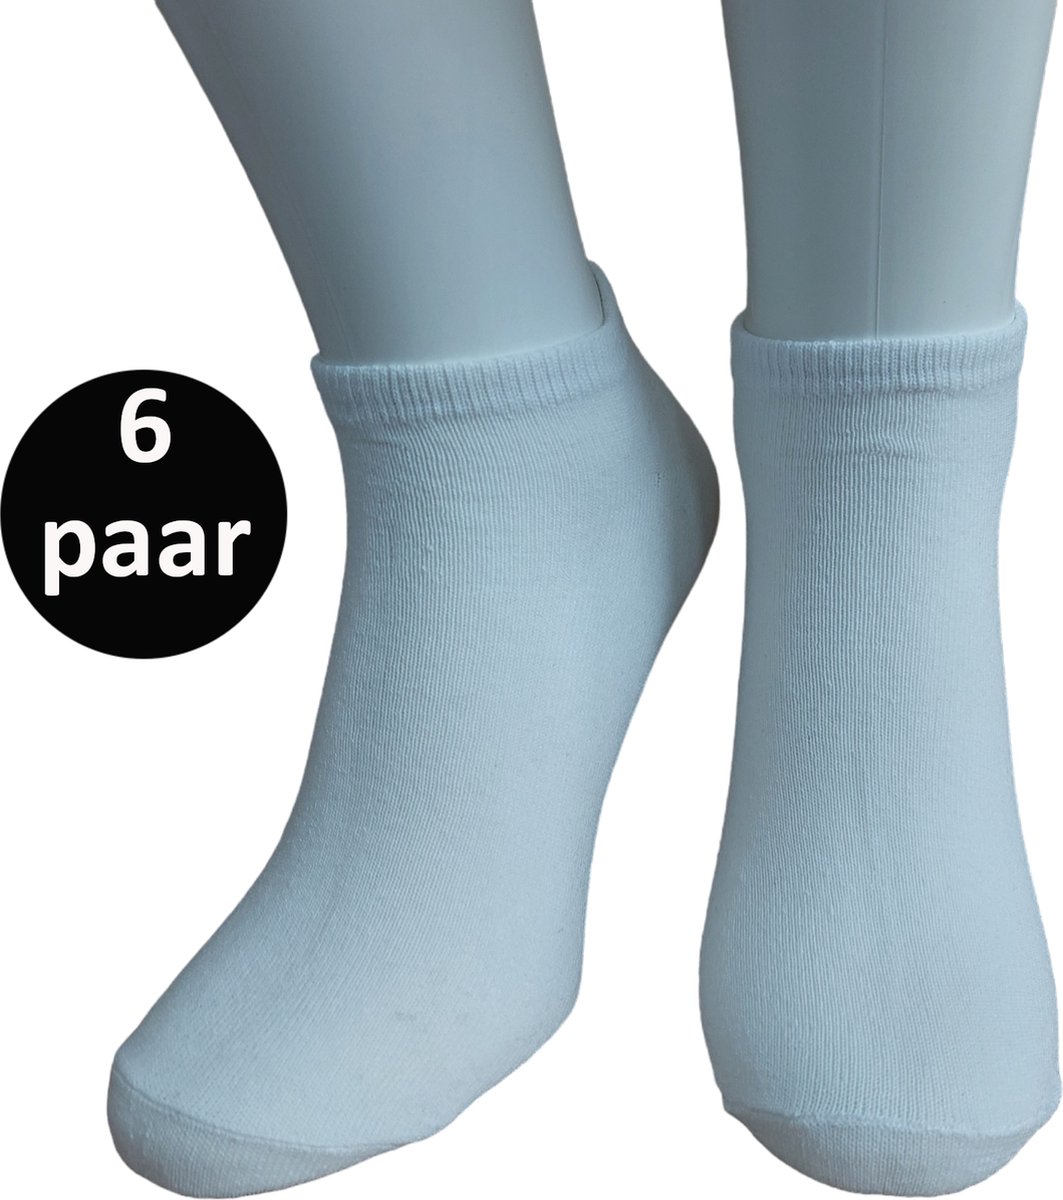 WeirdoSox Sneaker Sokken - 6 paar - Unisex - Wit - Maat 43/46 - Enkel sokken - Korte sokken - WeirdoSox